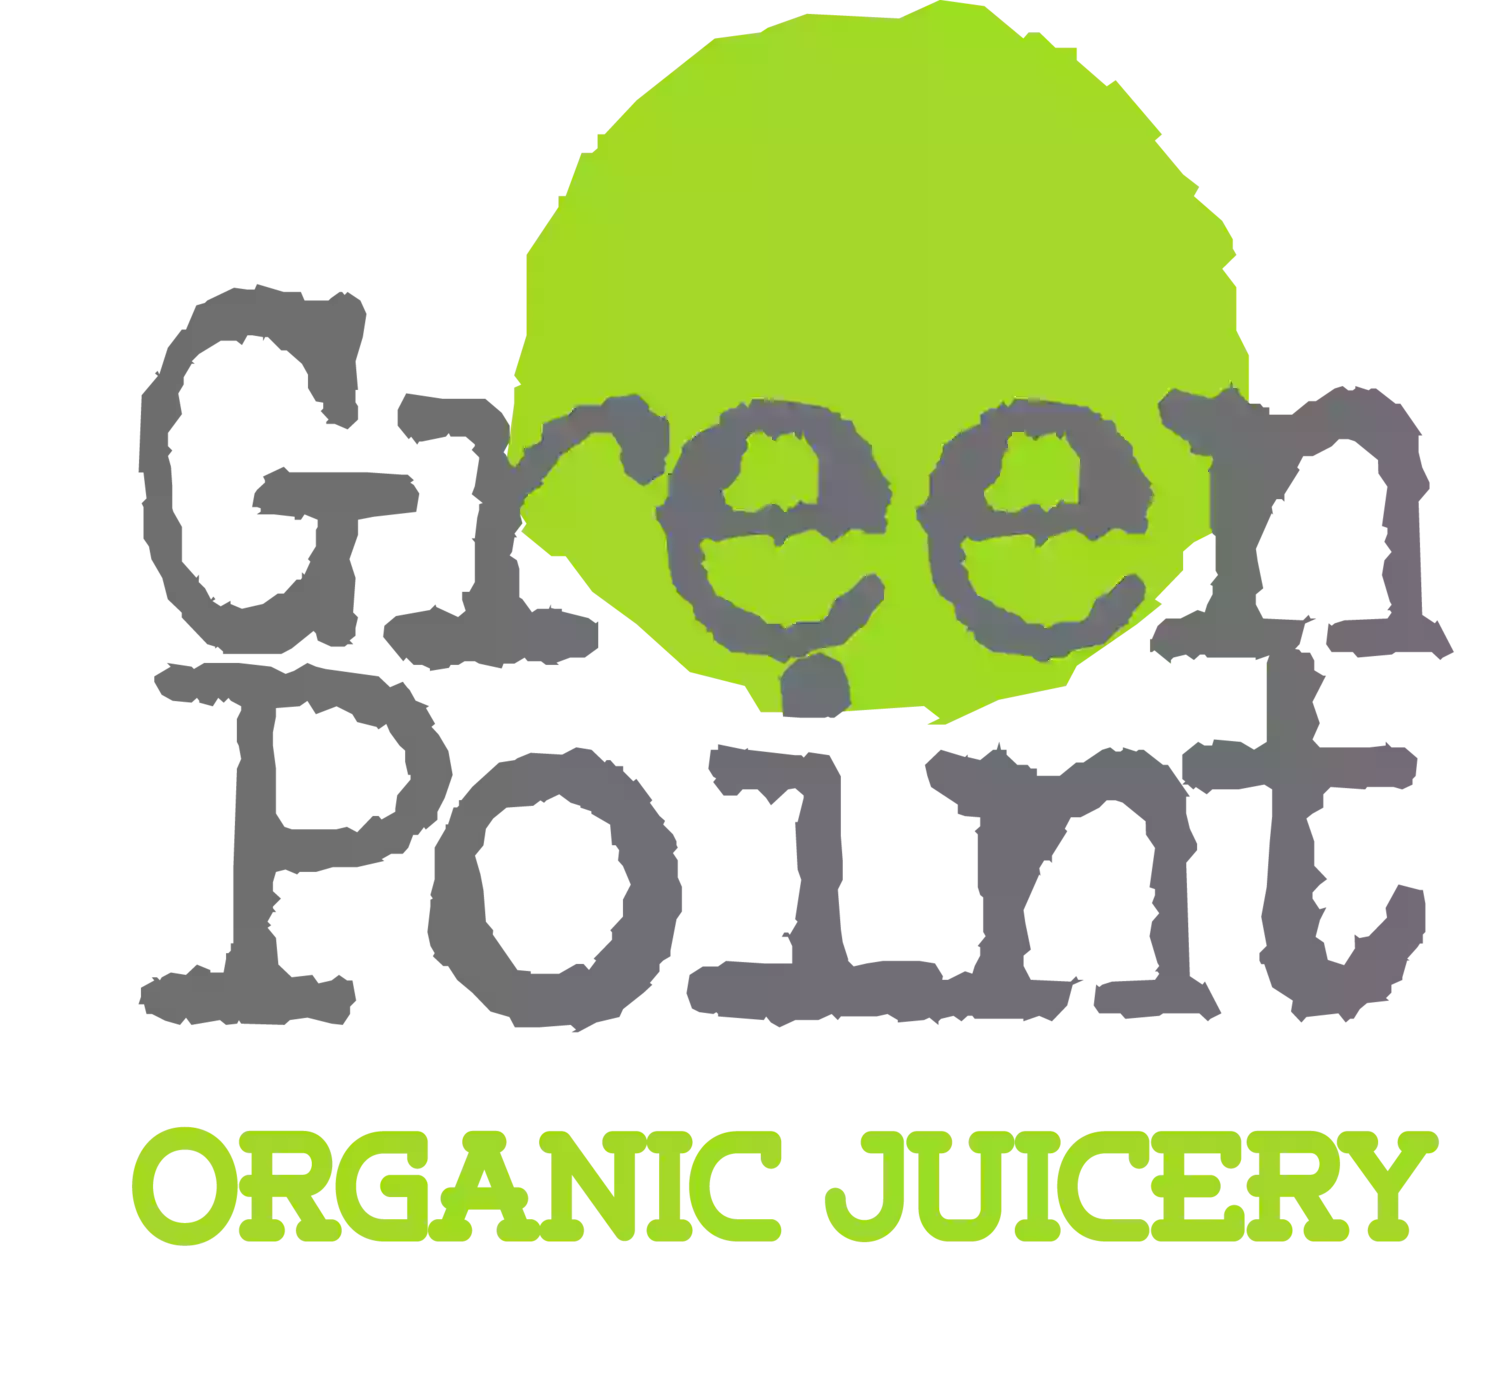 Green Point Juicery: Organic Juice Bar